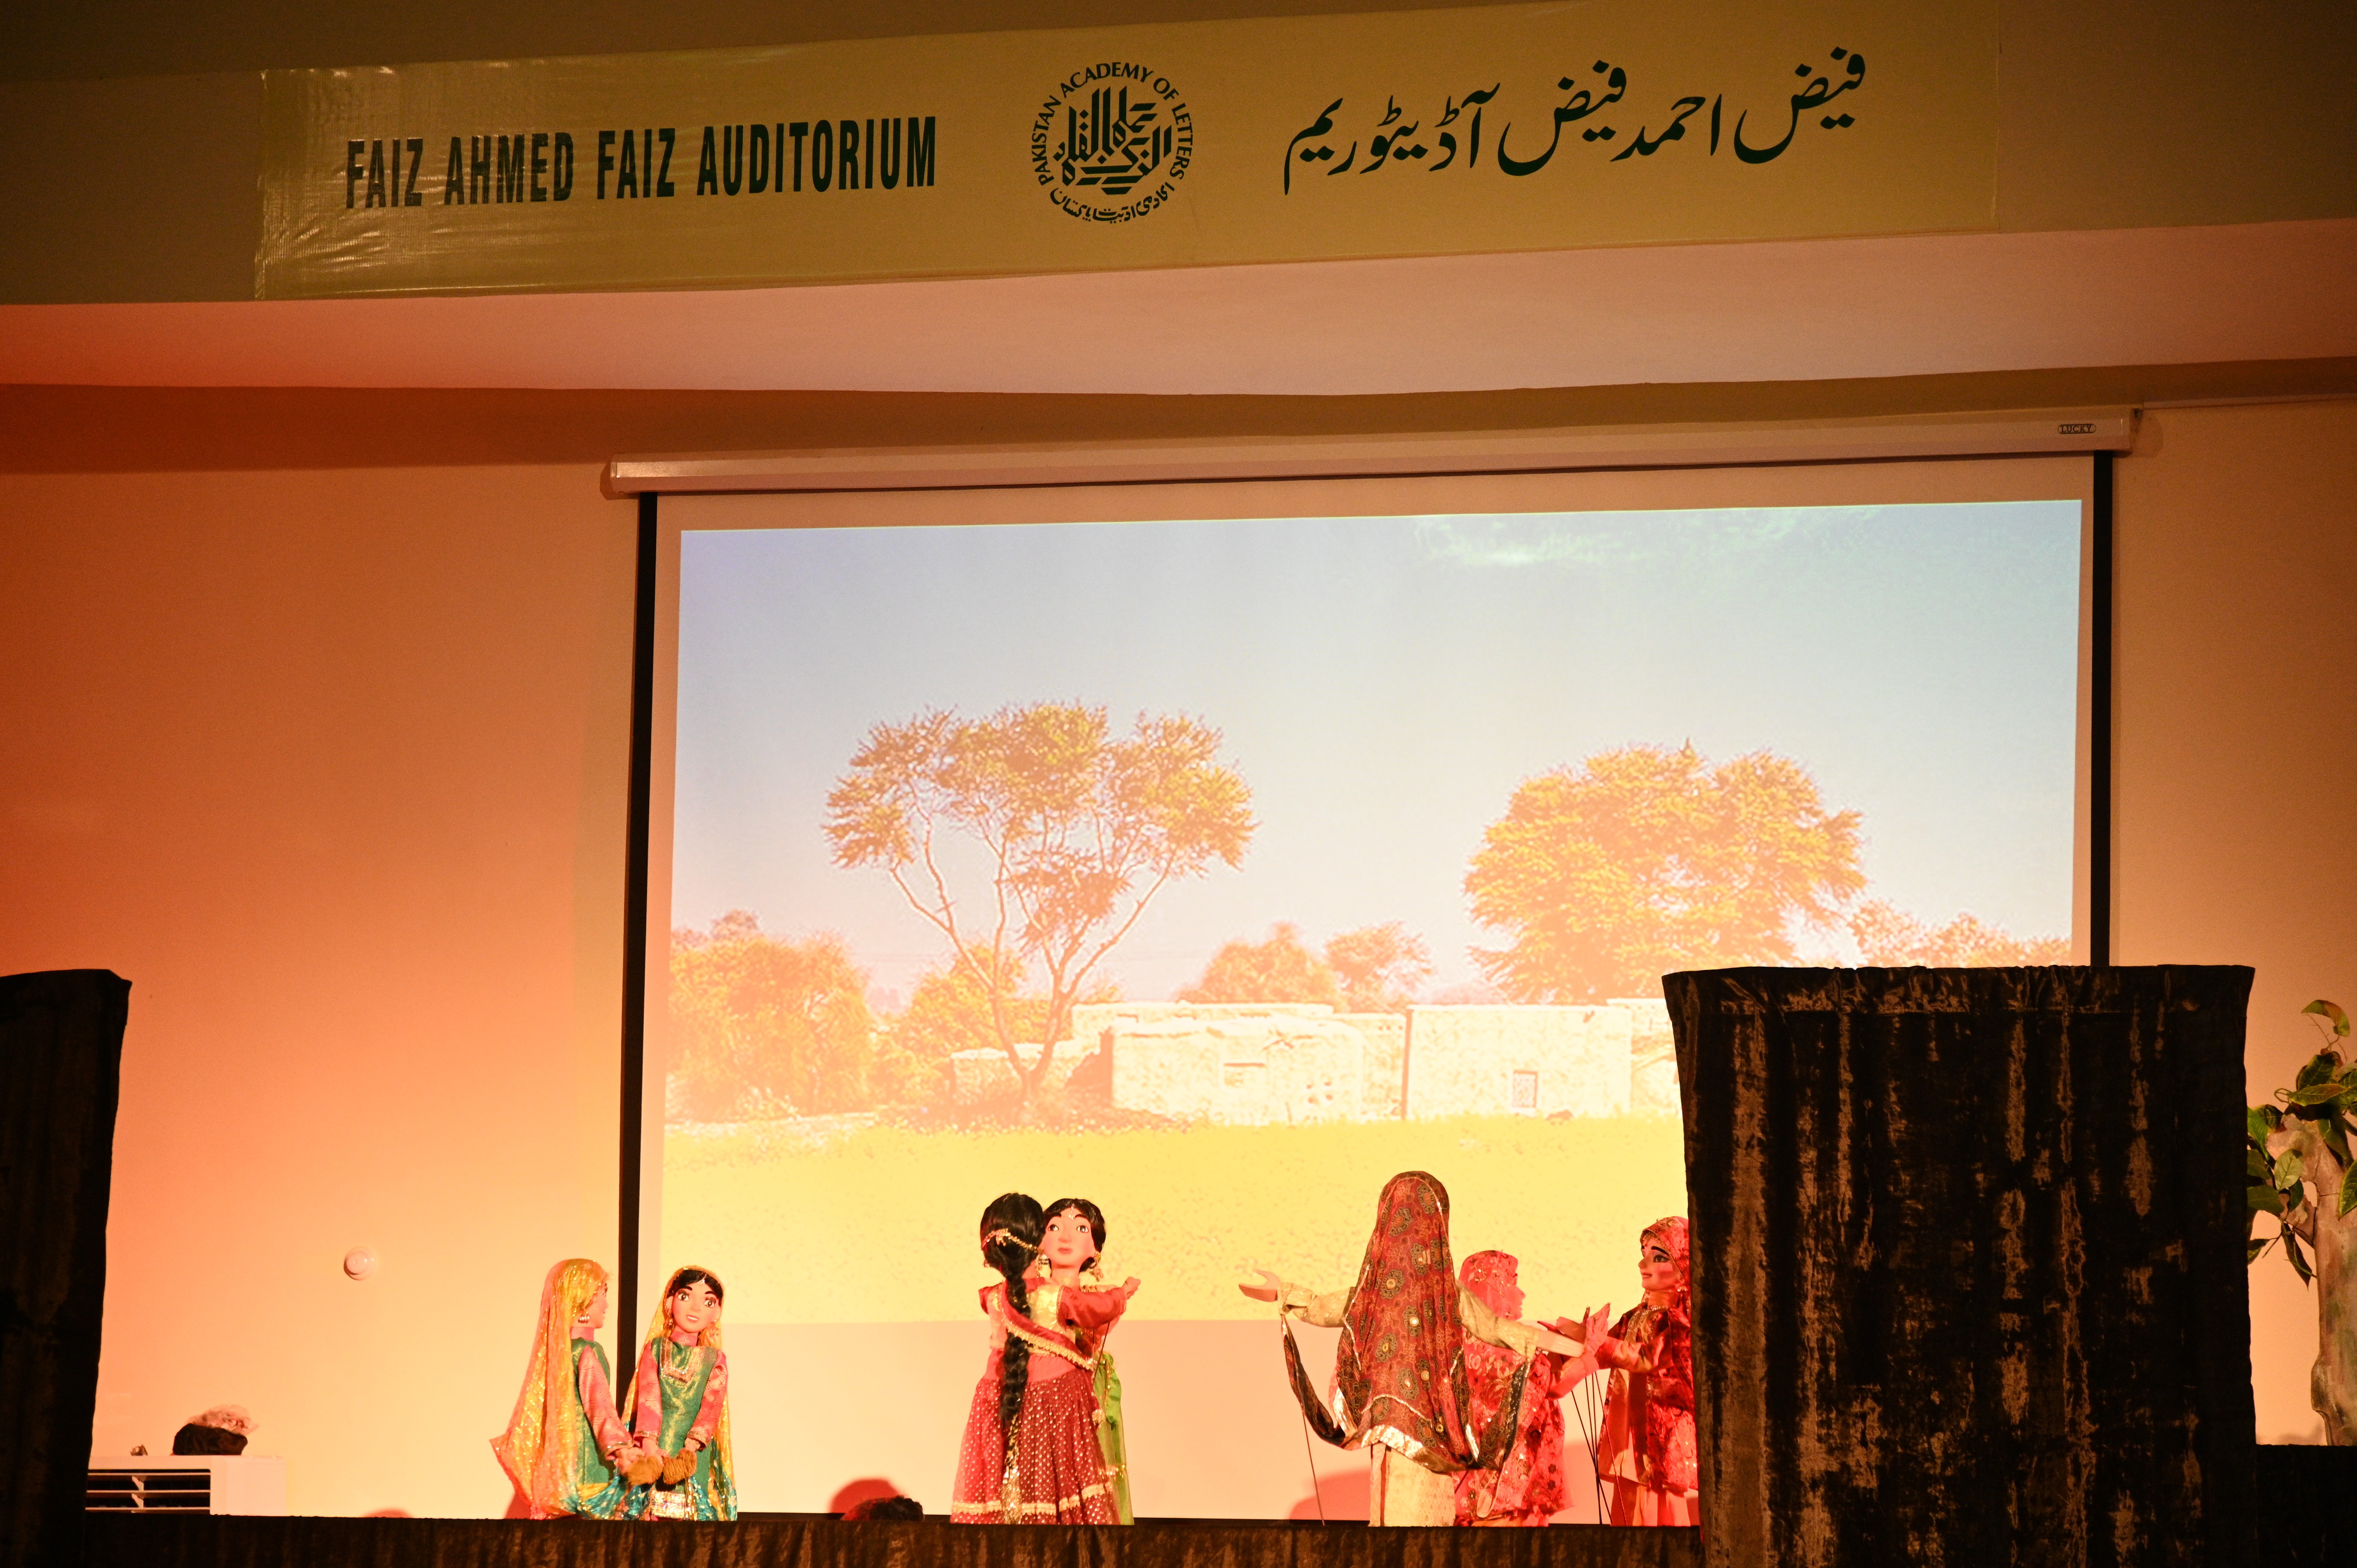 puppet show at Faiz Ahmad Faiz auditorium organized by Pakistan Academy of Letters